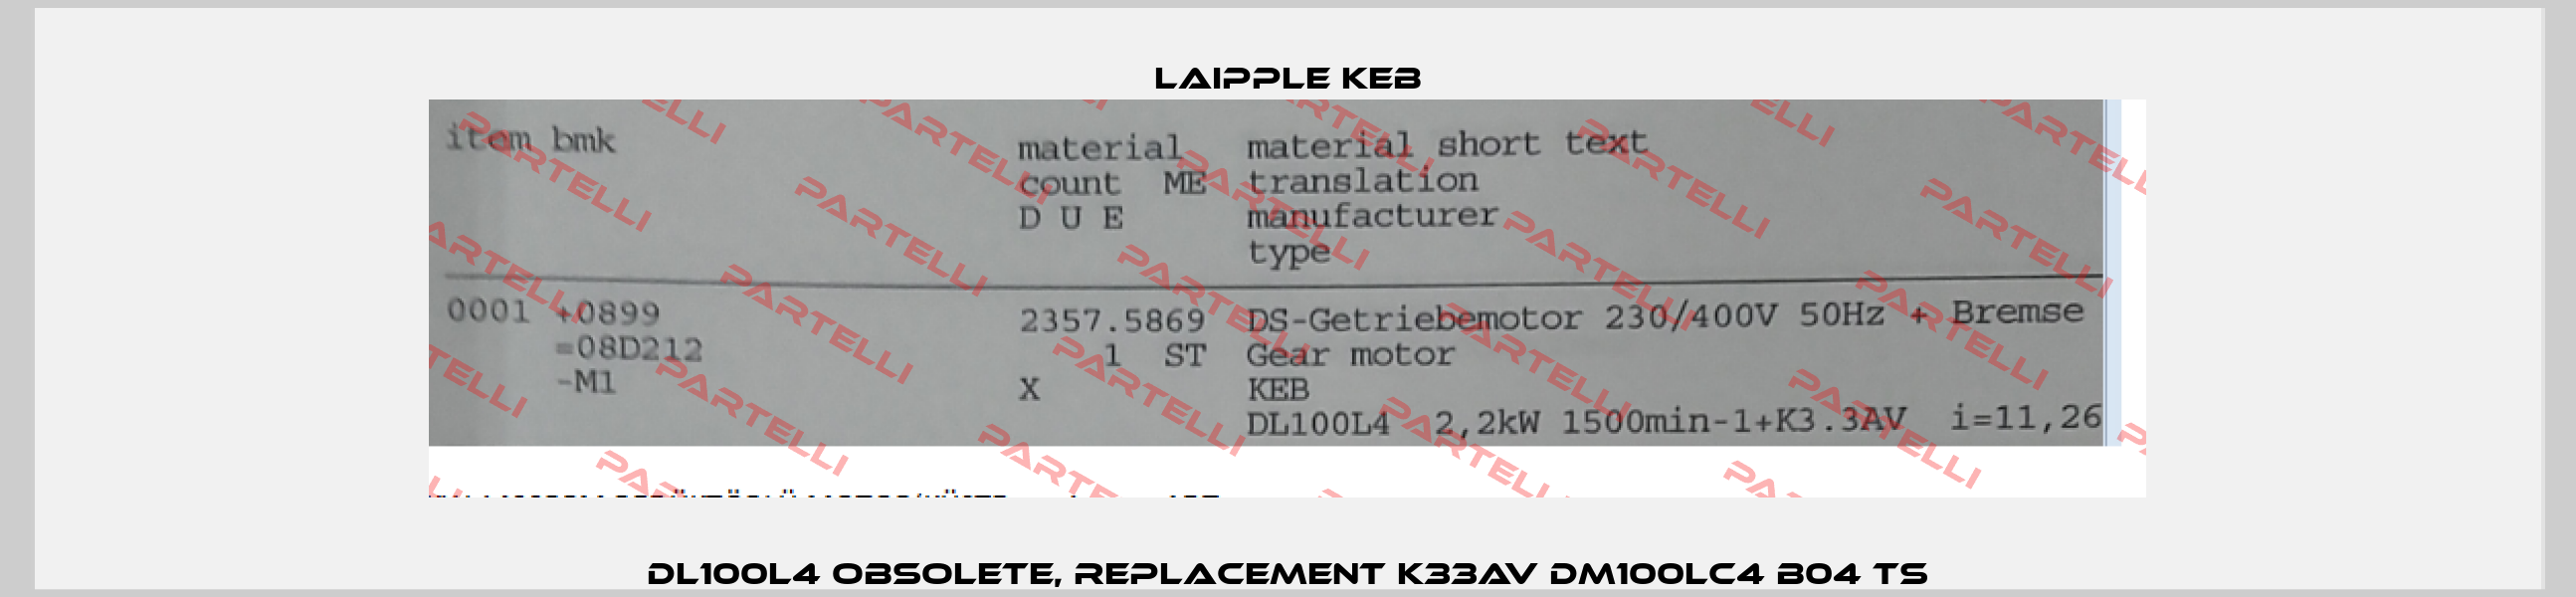 DL100L4 obsolete, replacement K33AV DM100LC4 B04 TS LAIPPLE KEB